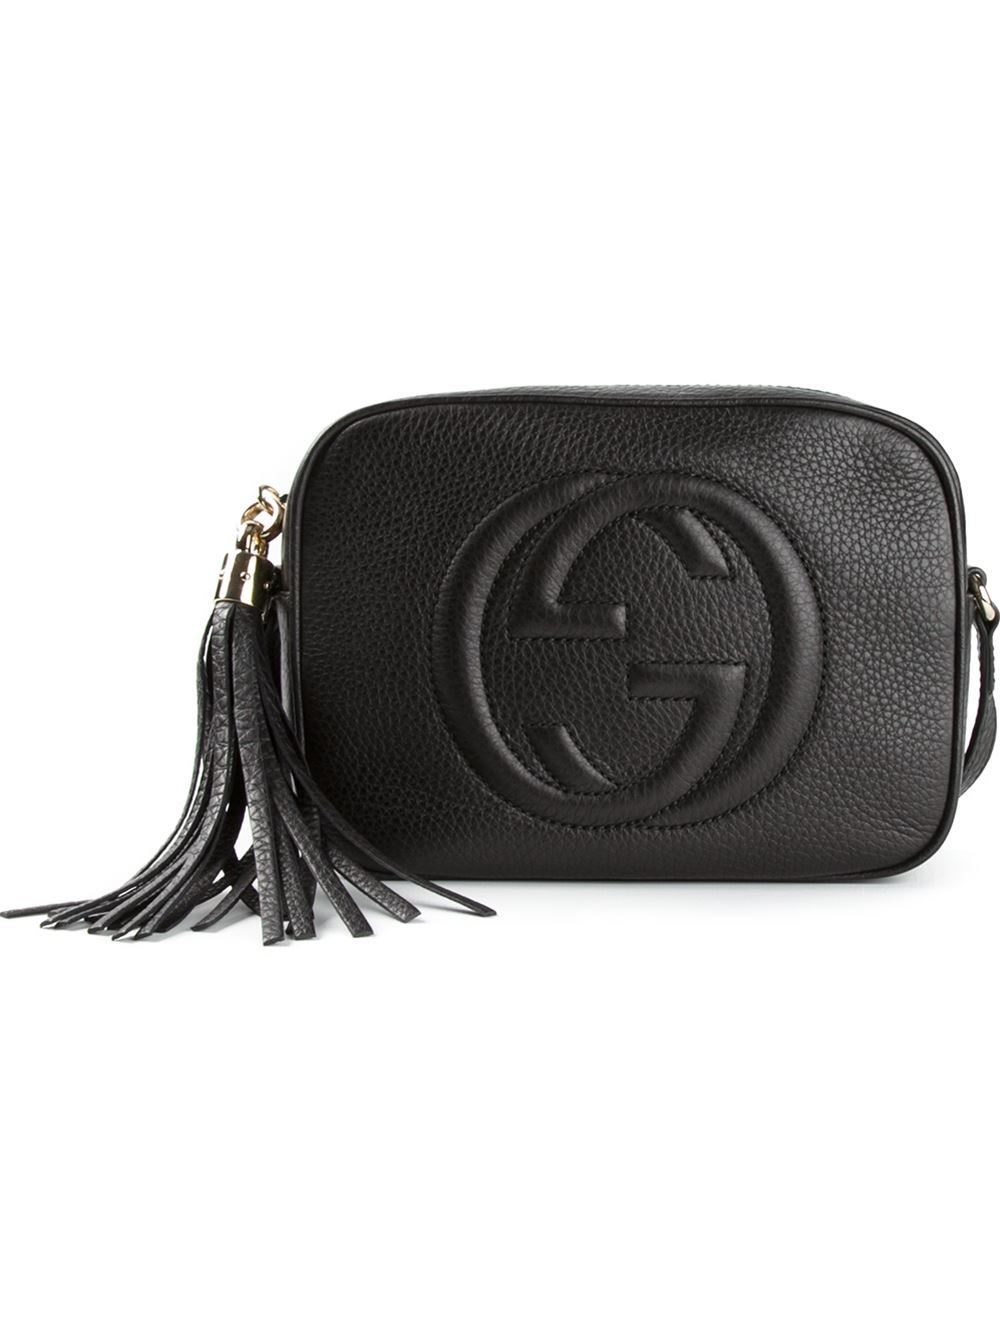 Lyst - Gucci Logo Cross Body Bag in Black